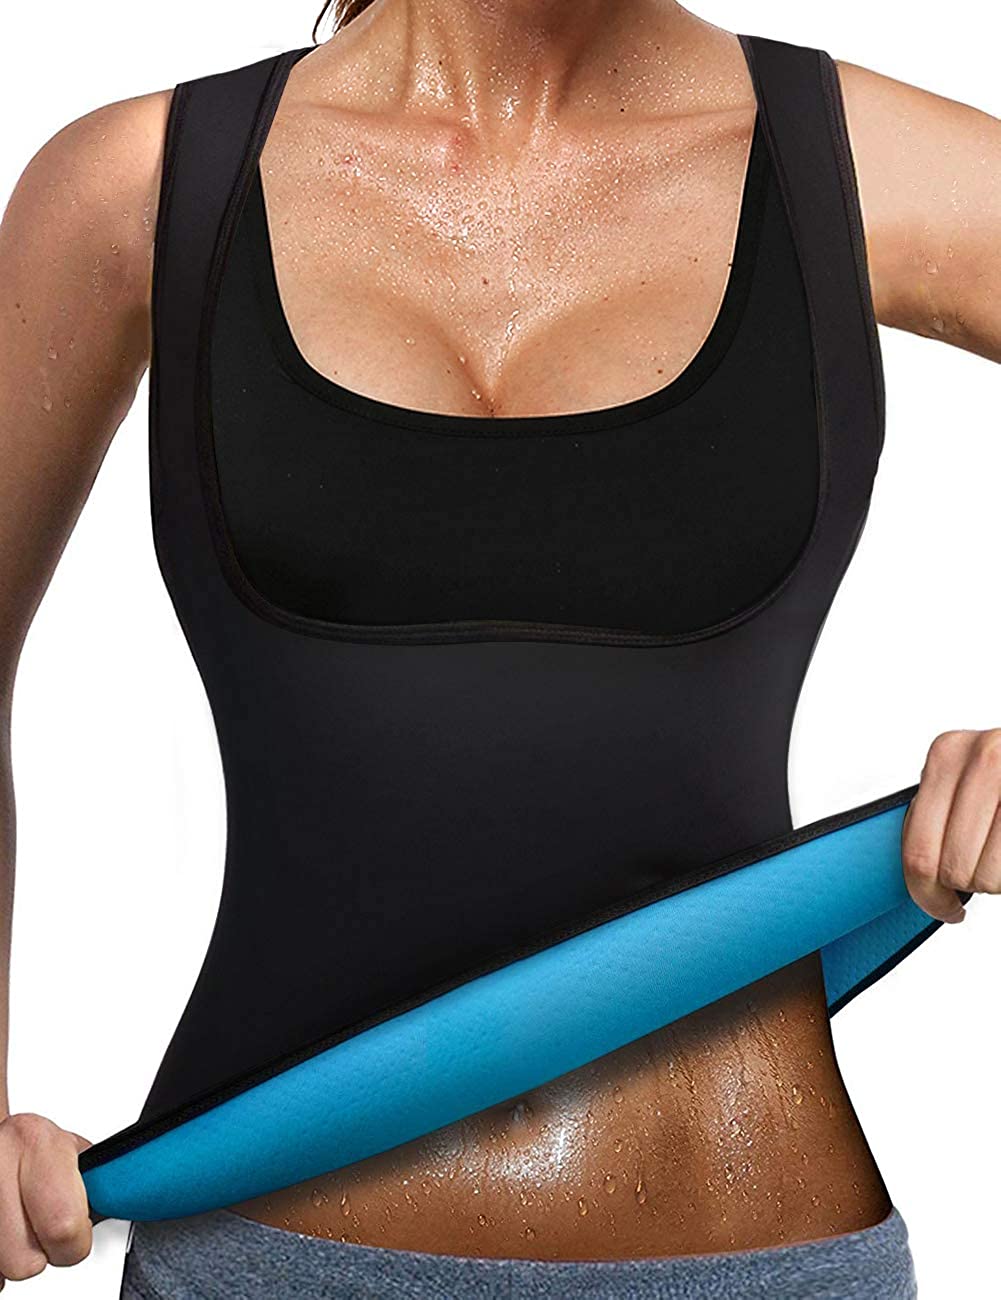 Women Neoprene Sauna Slimming Waist Trainer Vest For Weight Loss Gym Workout Hot 